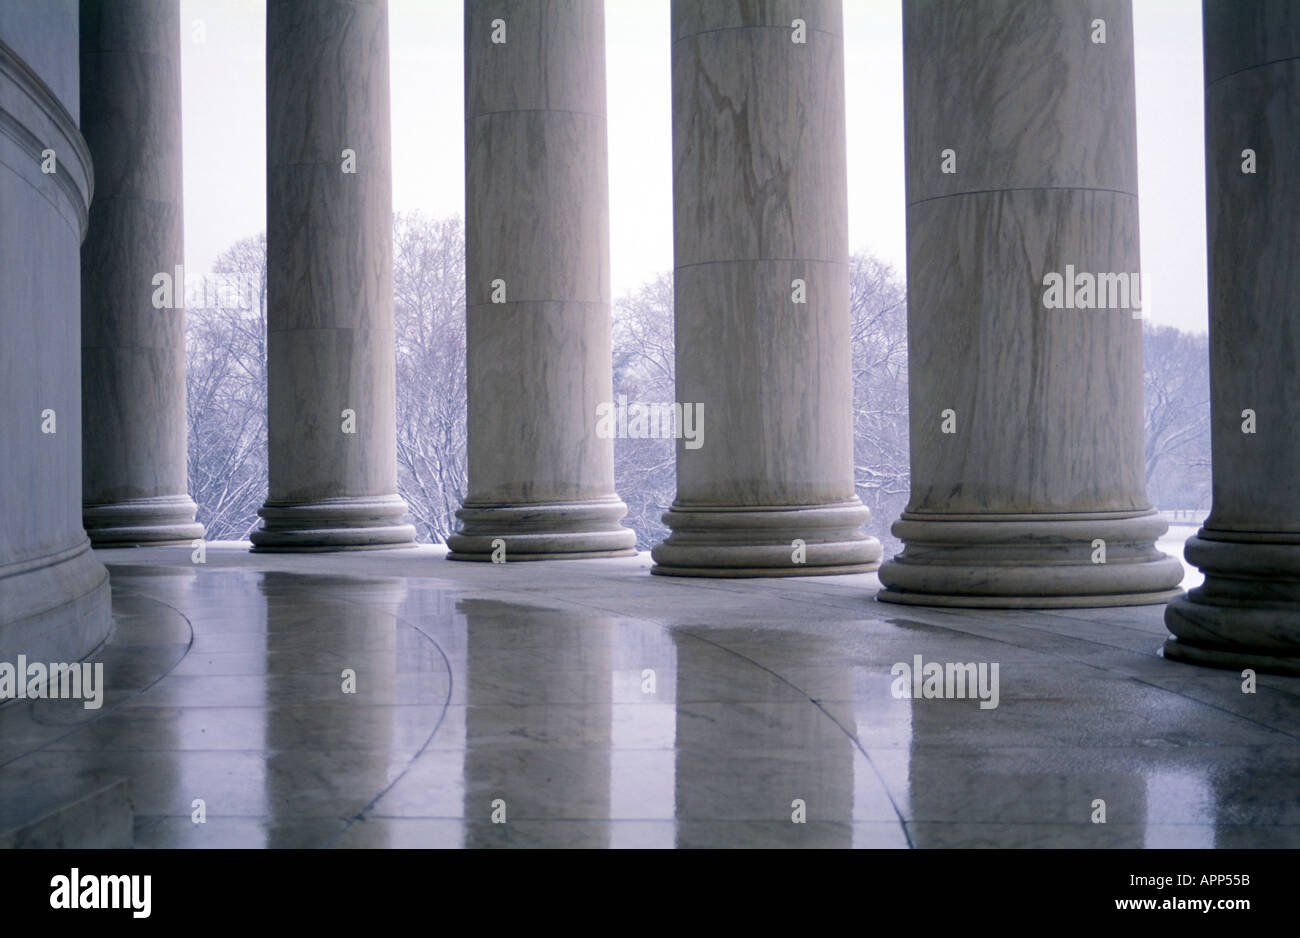 Jefferson Memorial, Washington D.C. Stock Photo